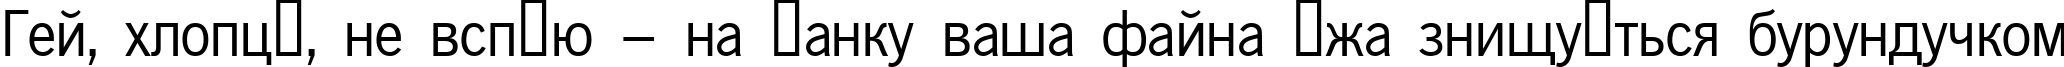 Пример написания шрифтом NewsGothic текста на украинском